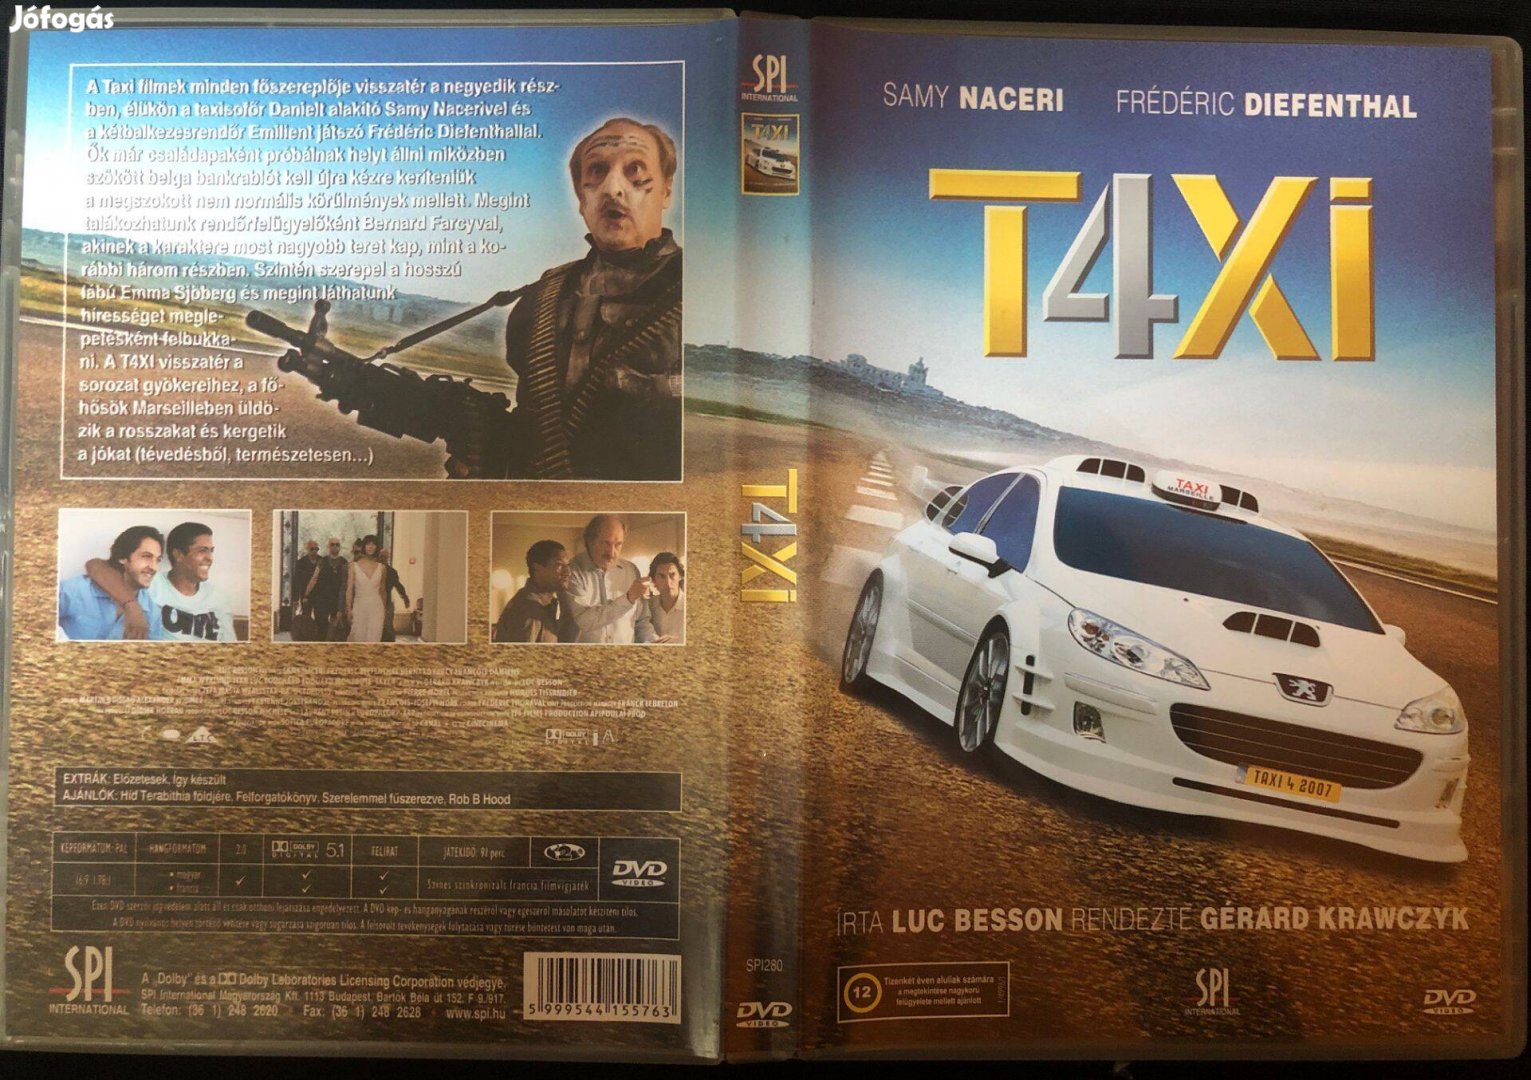 Taxi 4. DVD (karcmentes, Samy Naceri, Frédéric Diefenthal)